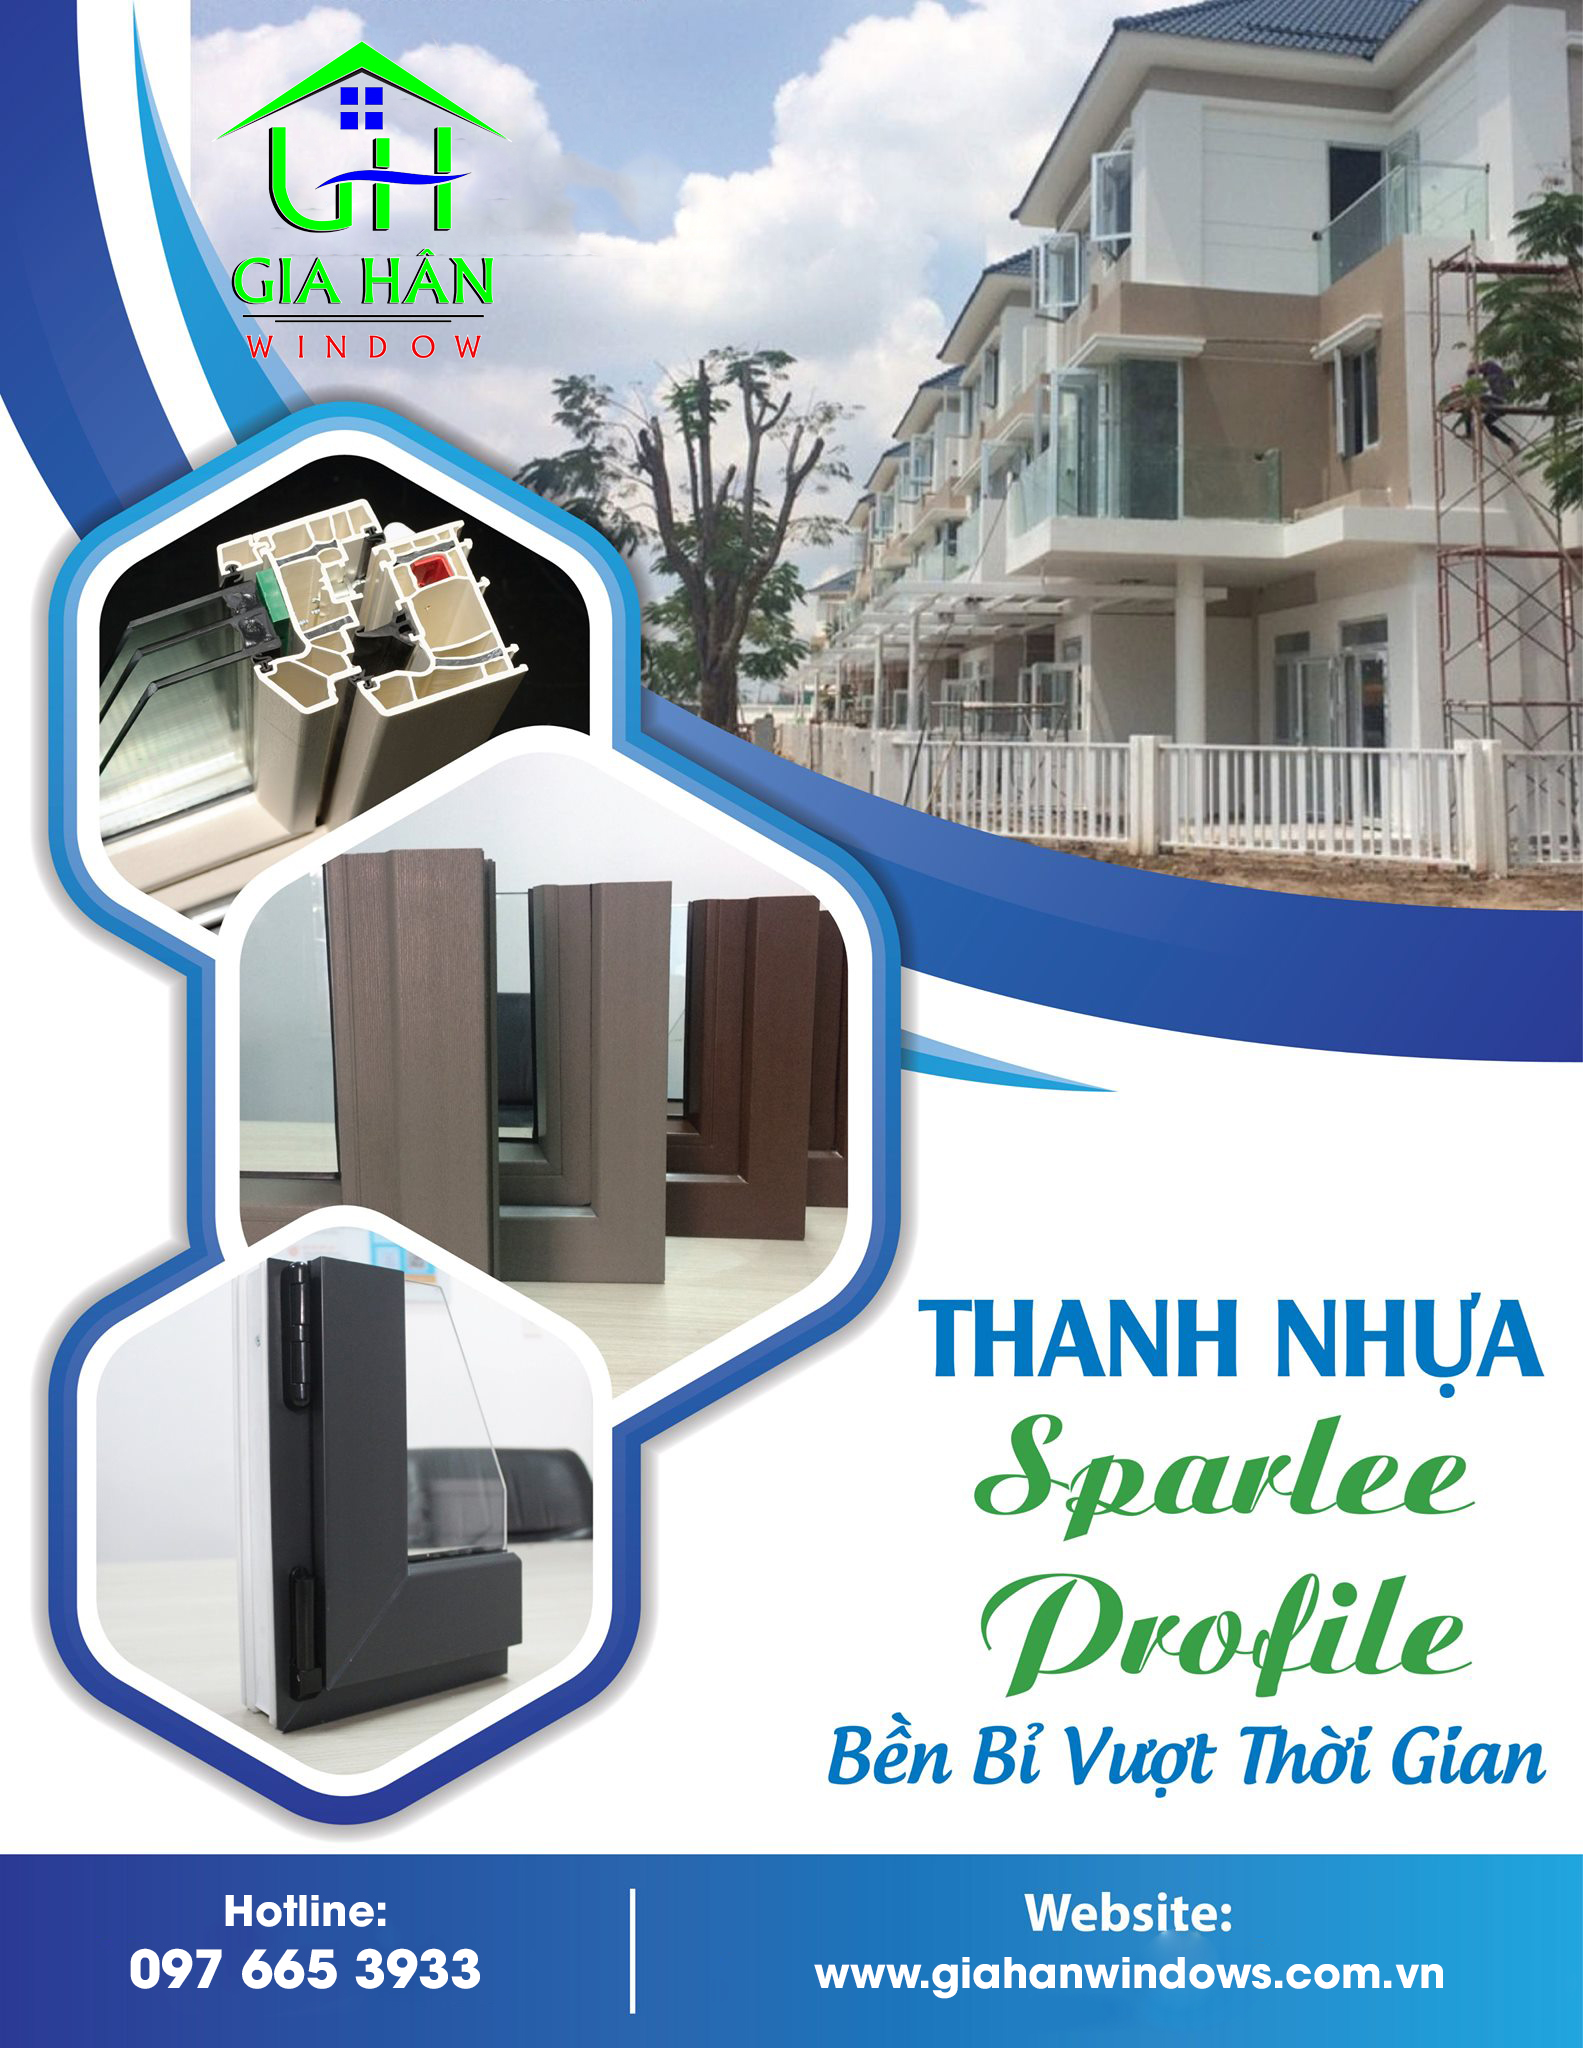 Thanh Nhua Sparklee 8